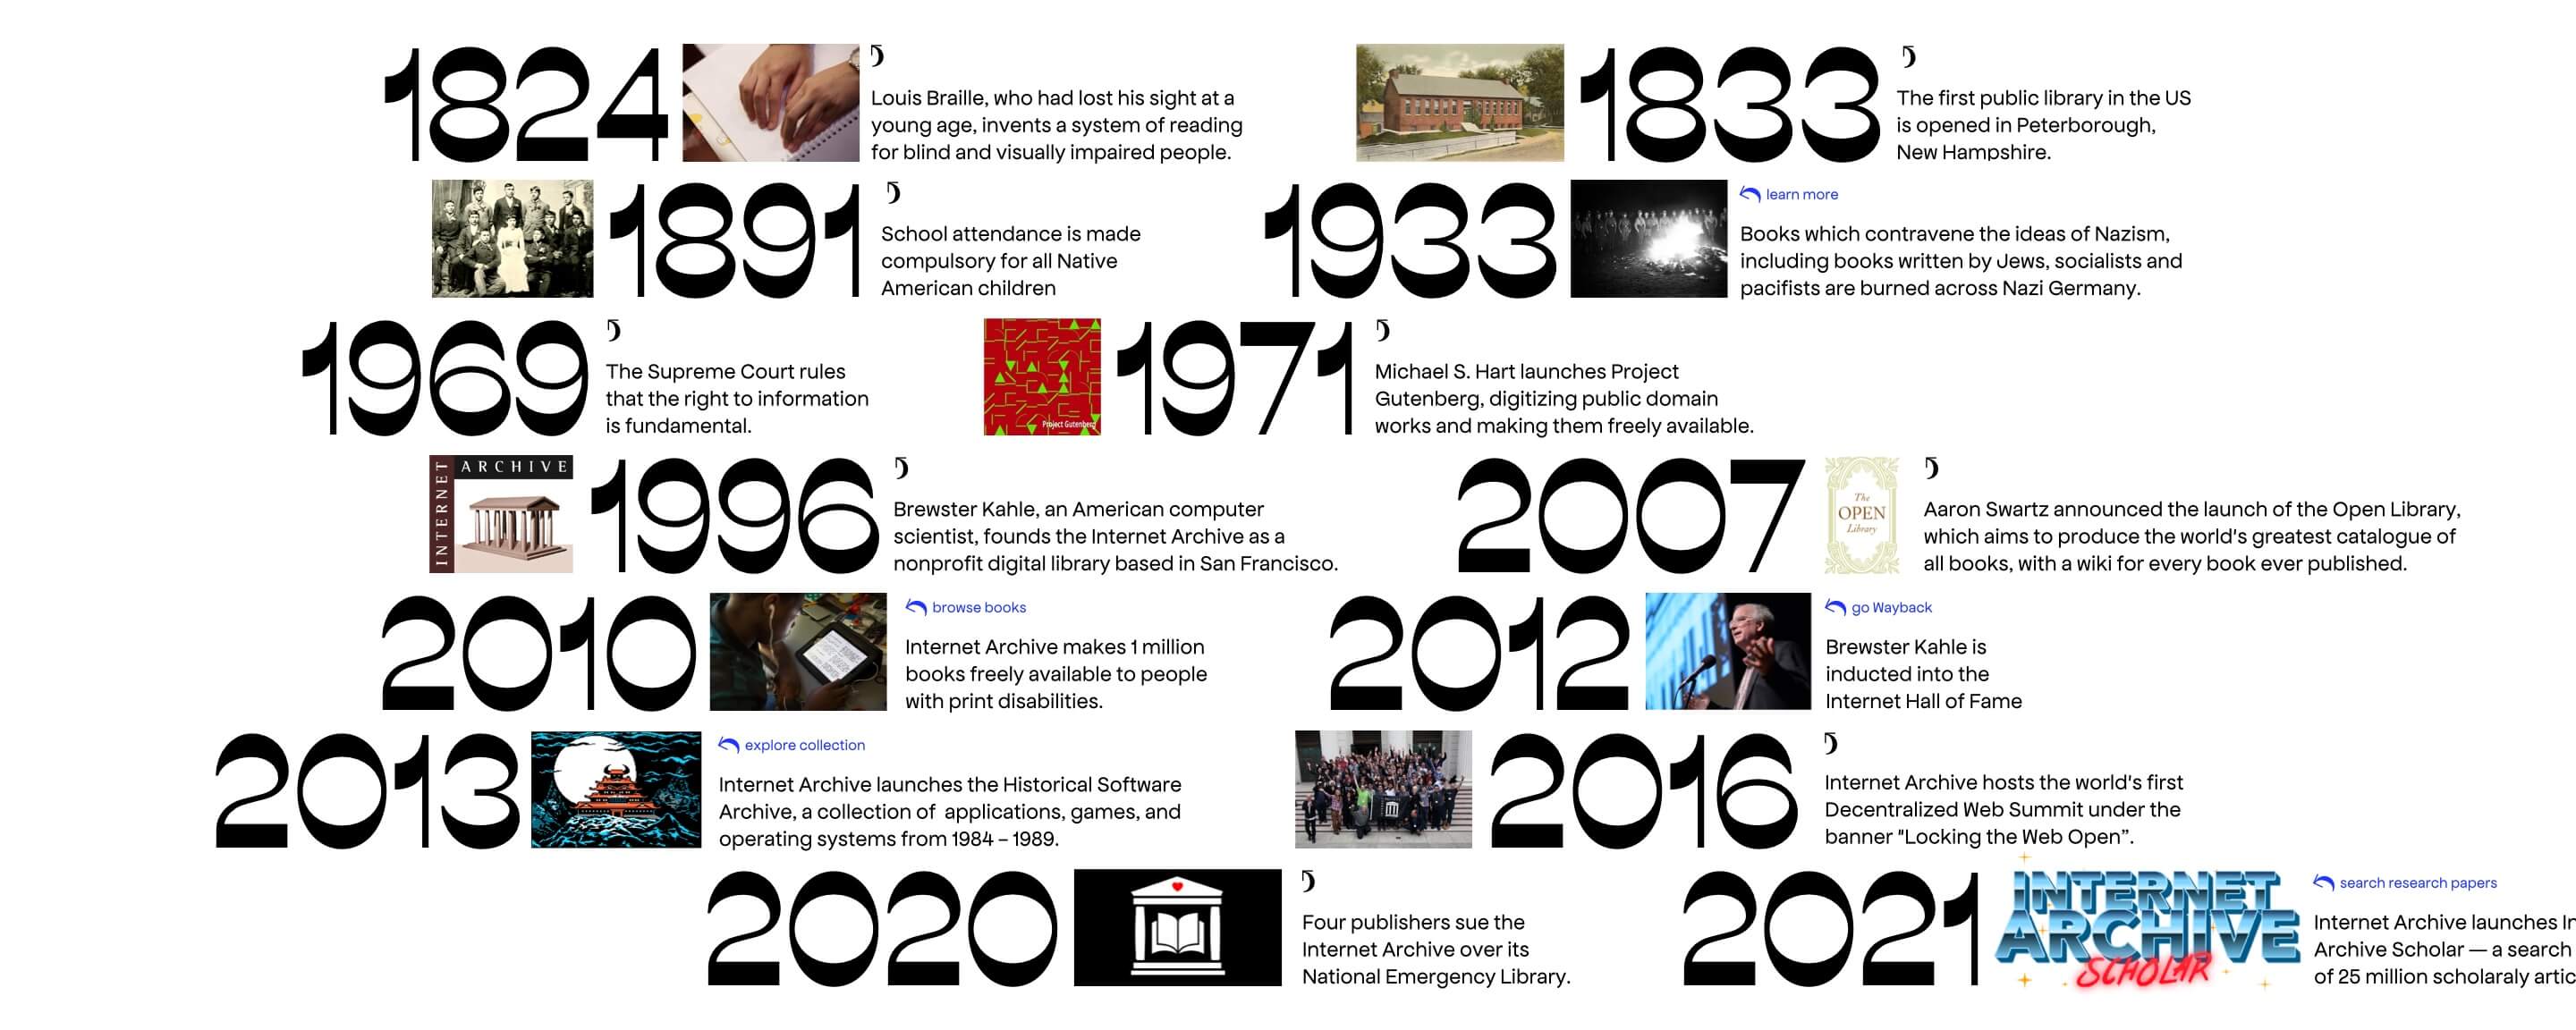 Internet-Archive-at-25-timeline-dates-Nezhynska-ALT